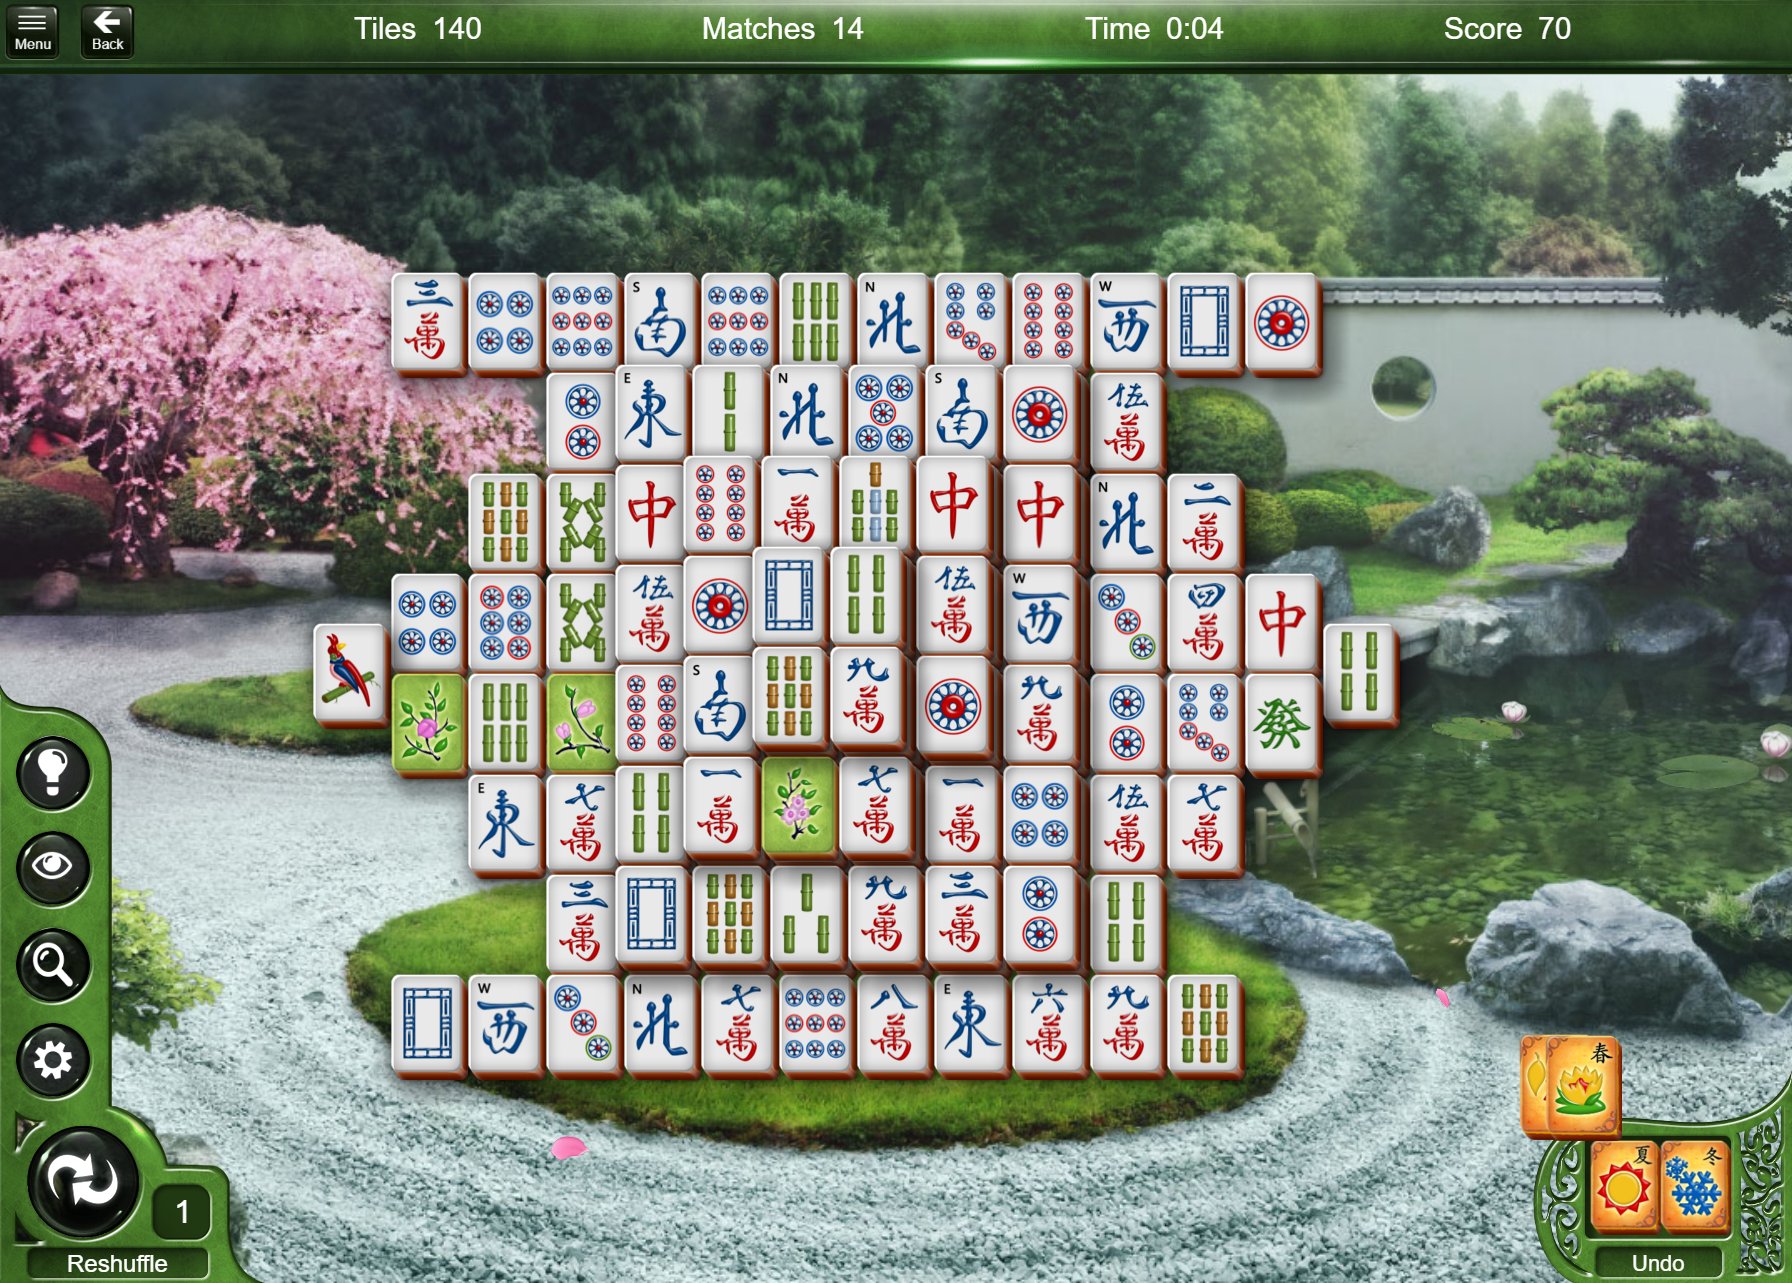 Microsoft Mahjong - Puzzle Games 